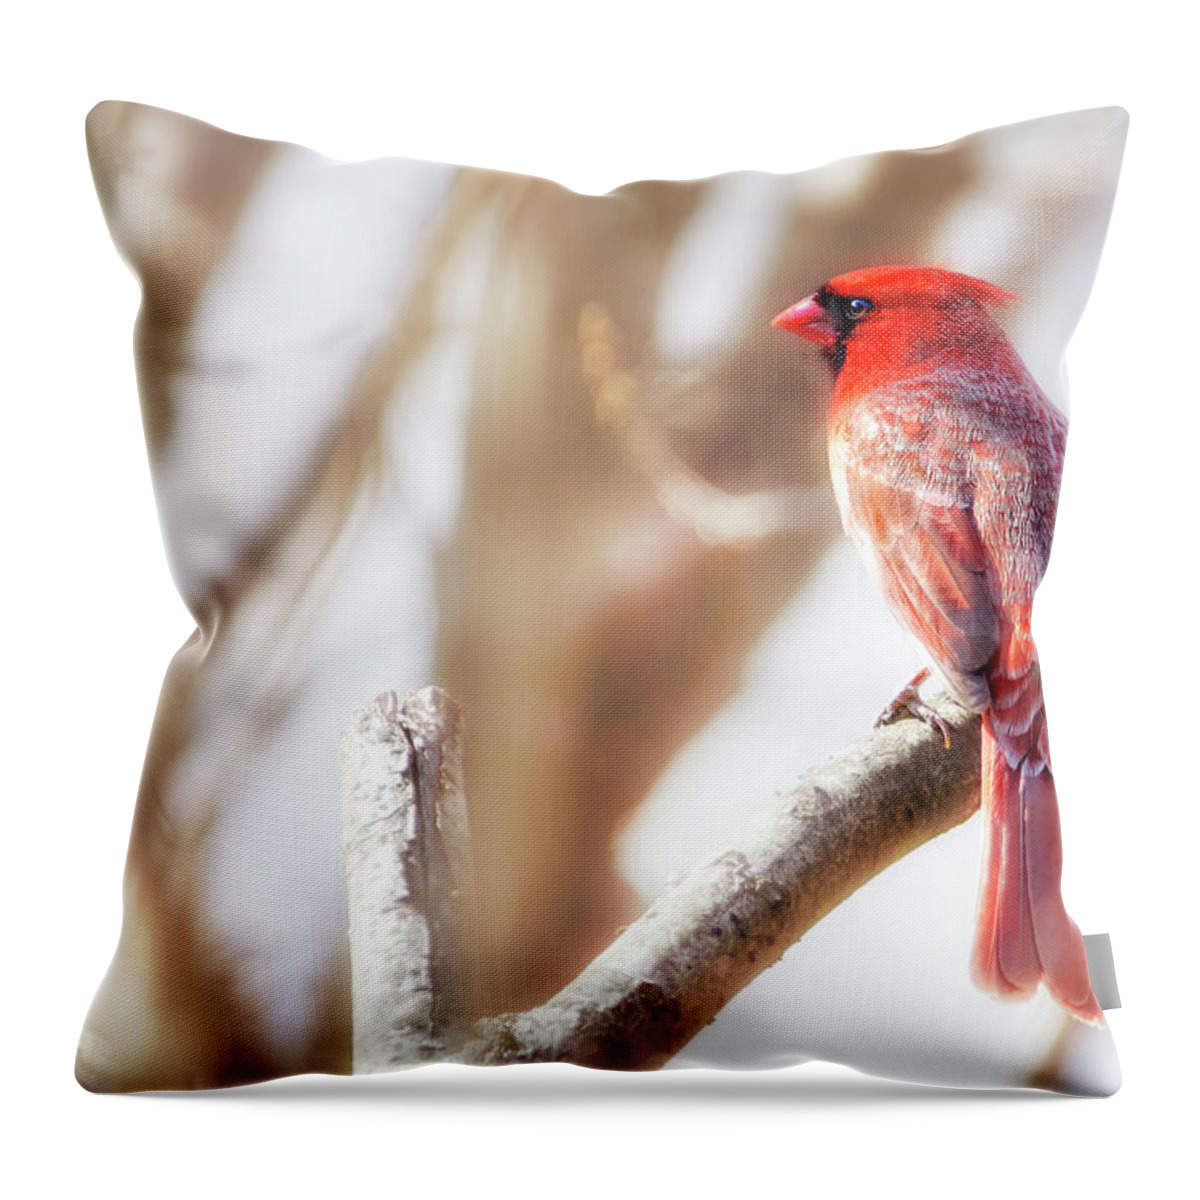 Songbird Throw Pillow featuring the photograph Red Cardinal by Copyright (c) Richard Susanto